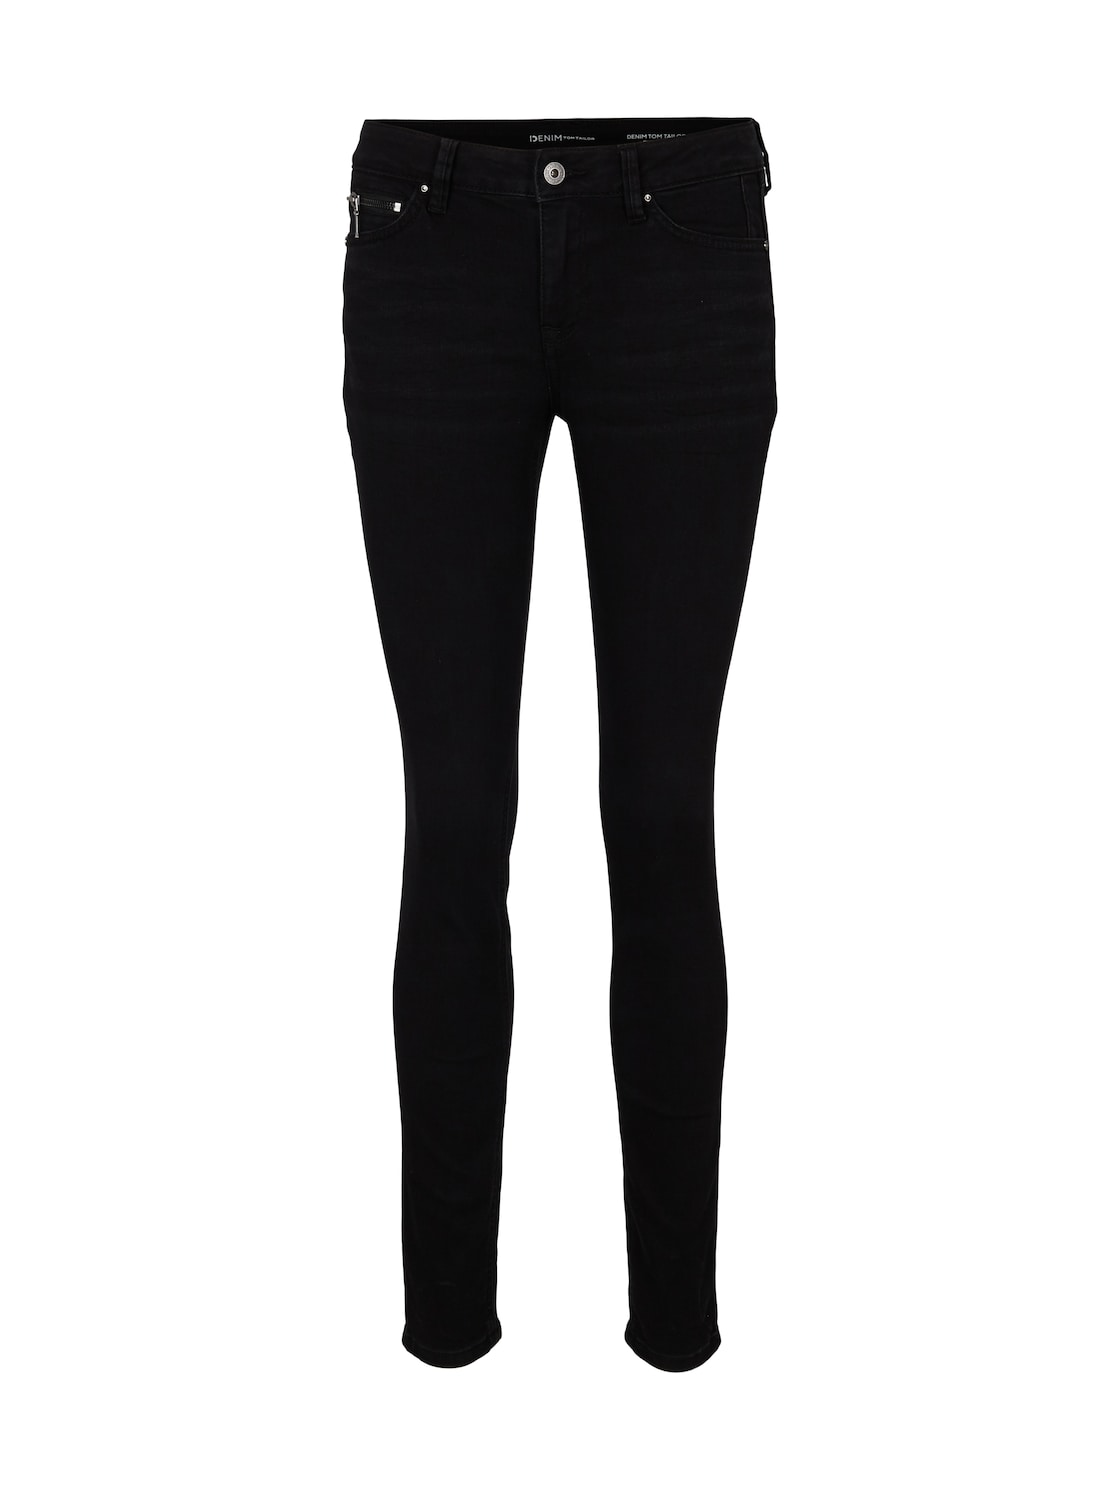 TOM TAILOR DENIM Damen Jona Extra Skinny Jeans mit recyceltem Polyester, schwarz, Uni, Gr. 26/34 von Tom Tailor Denim